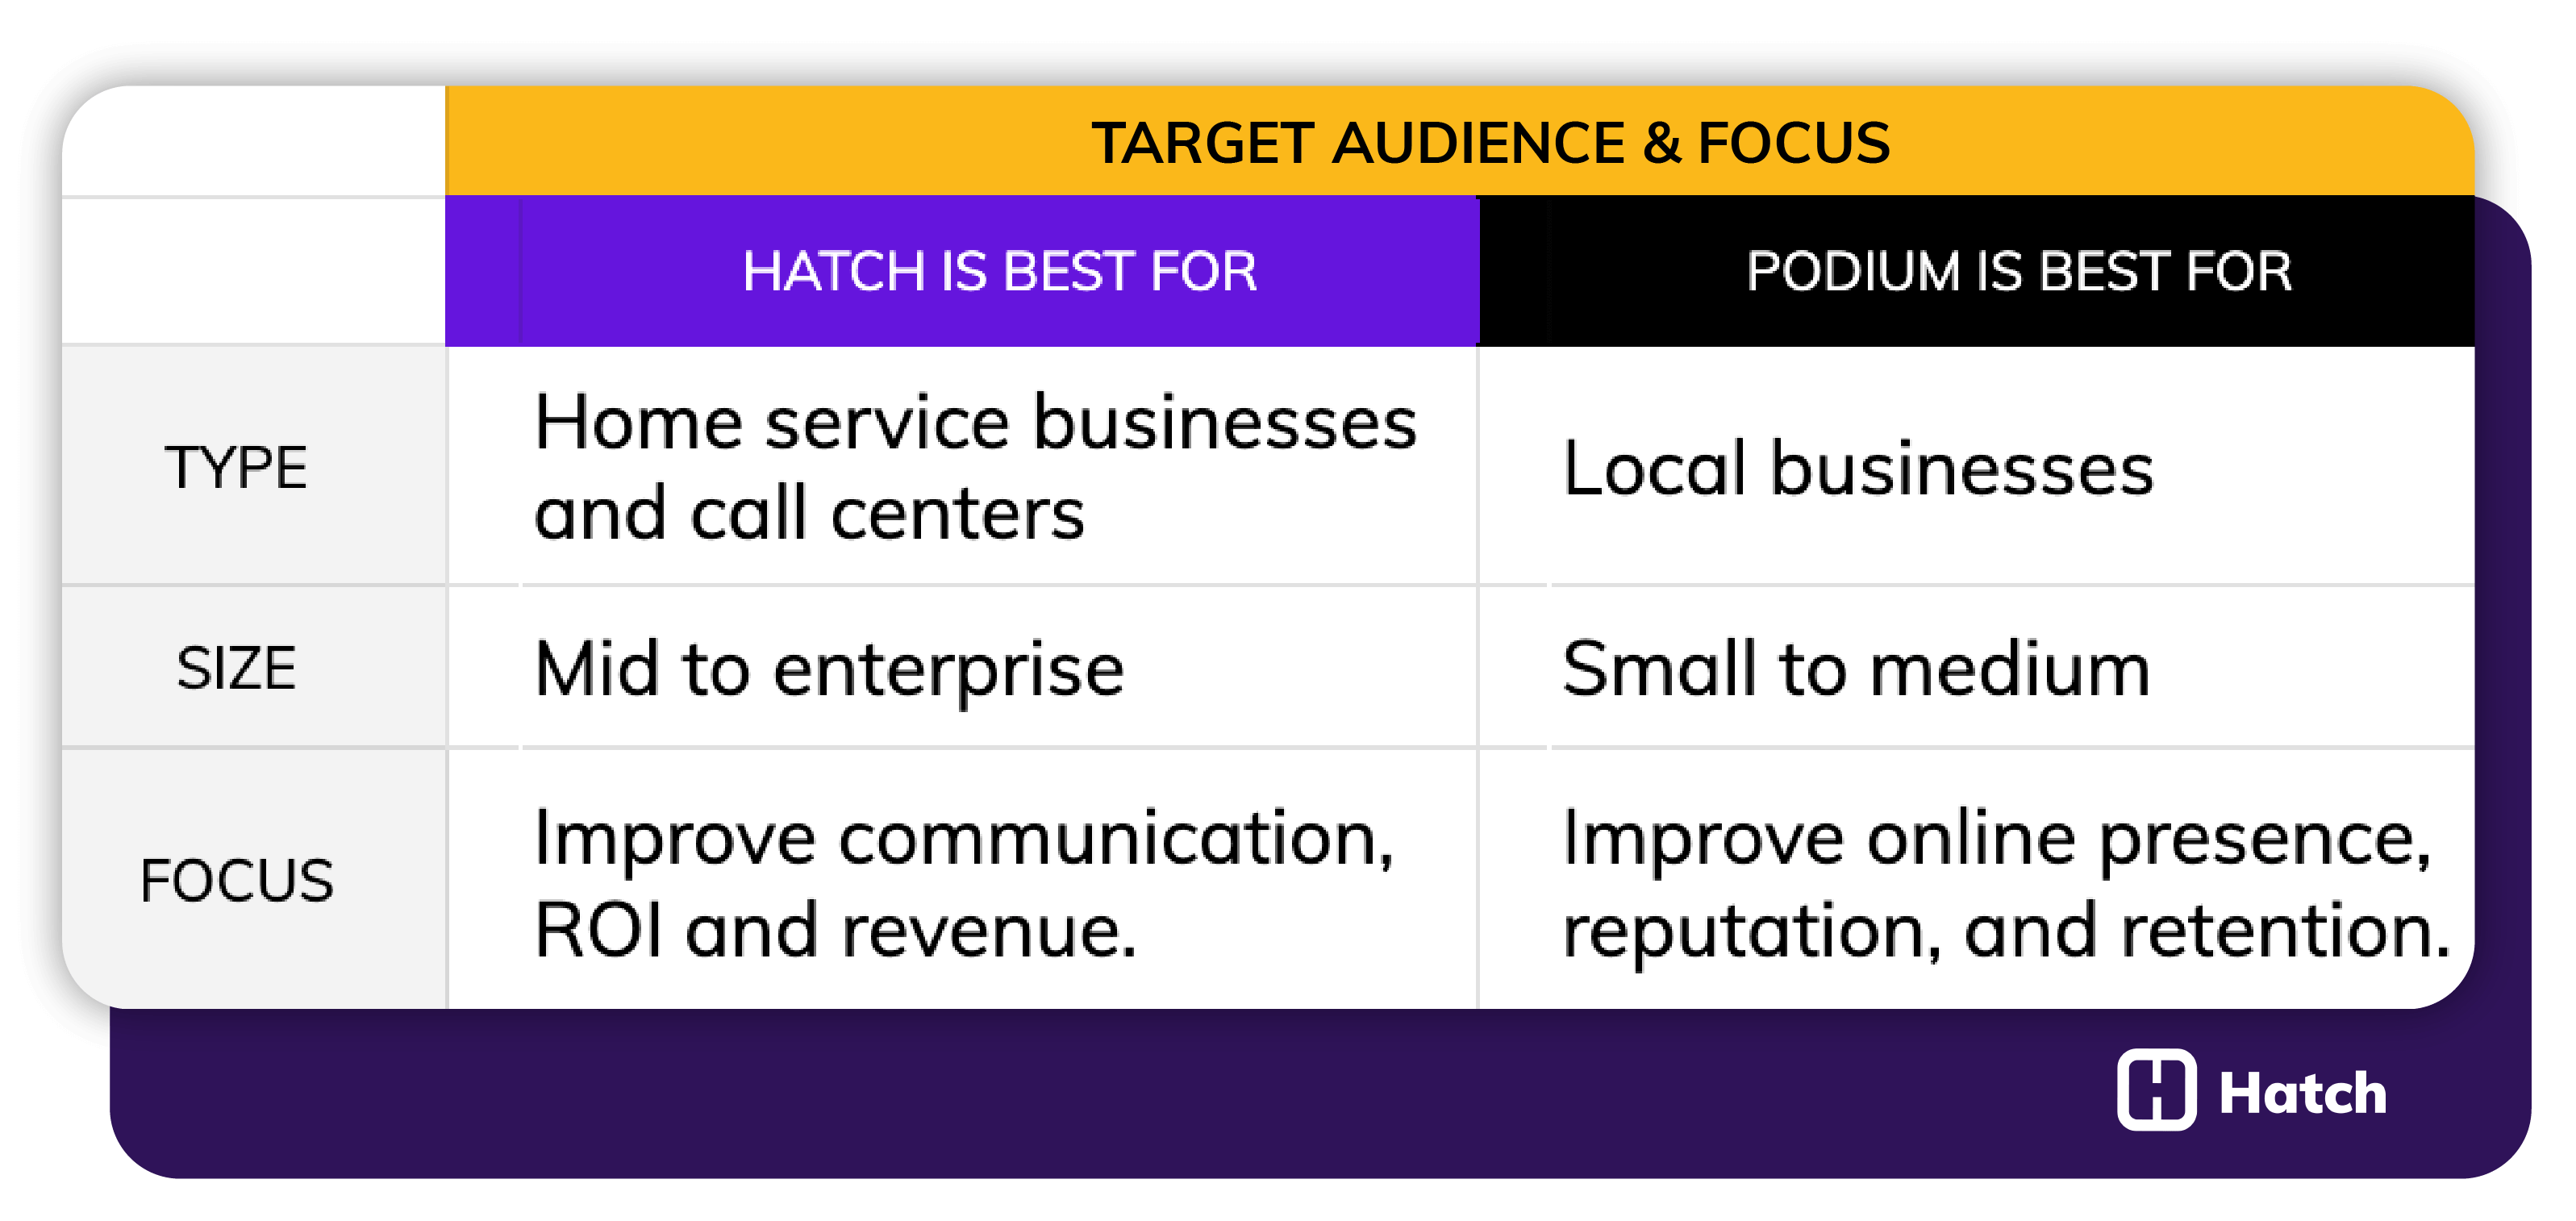 hatch vs podium - target audience and focus